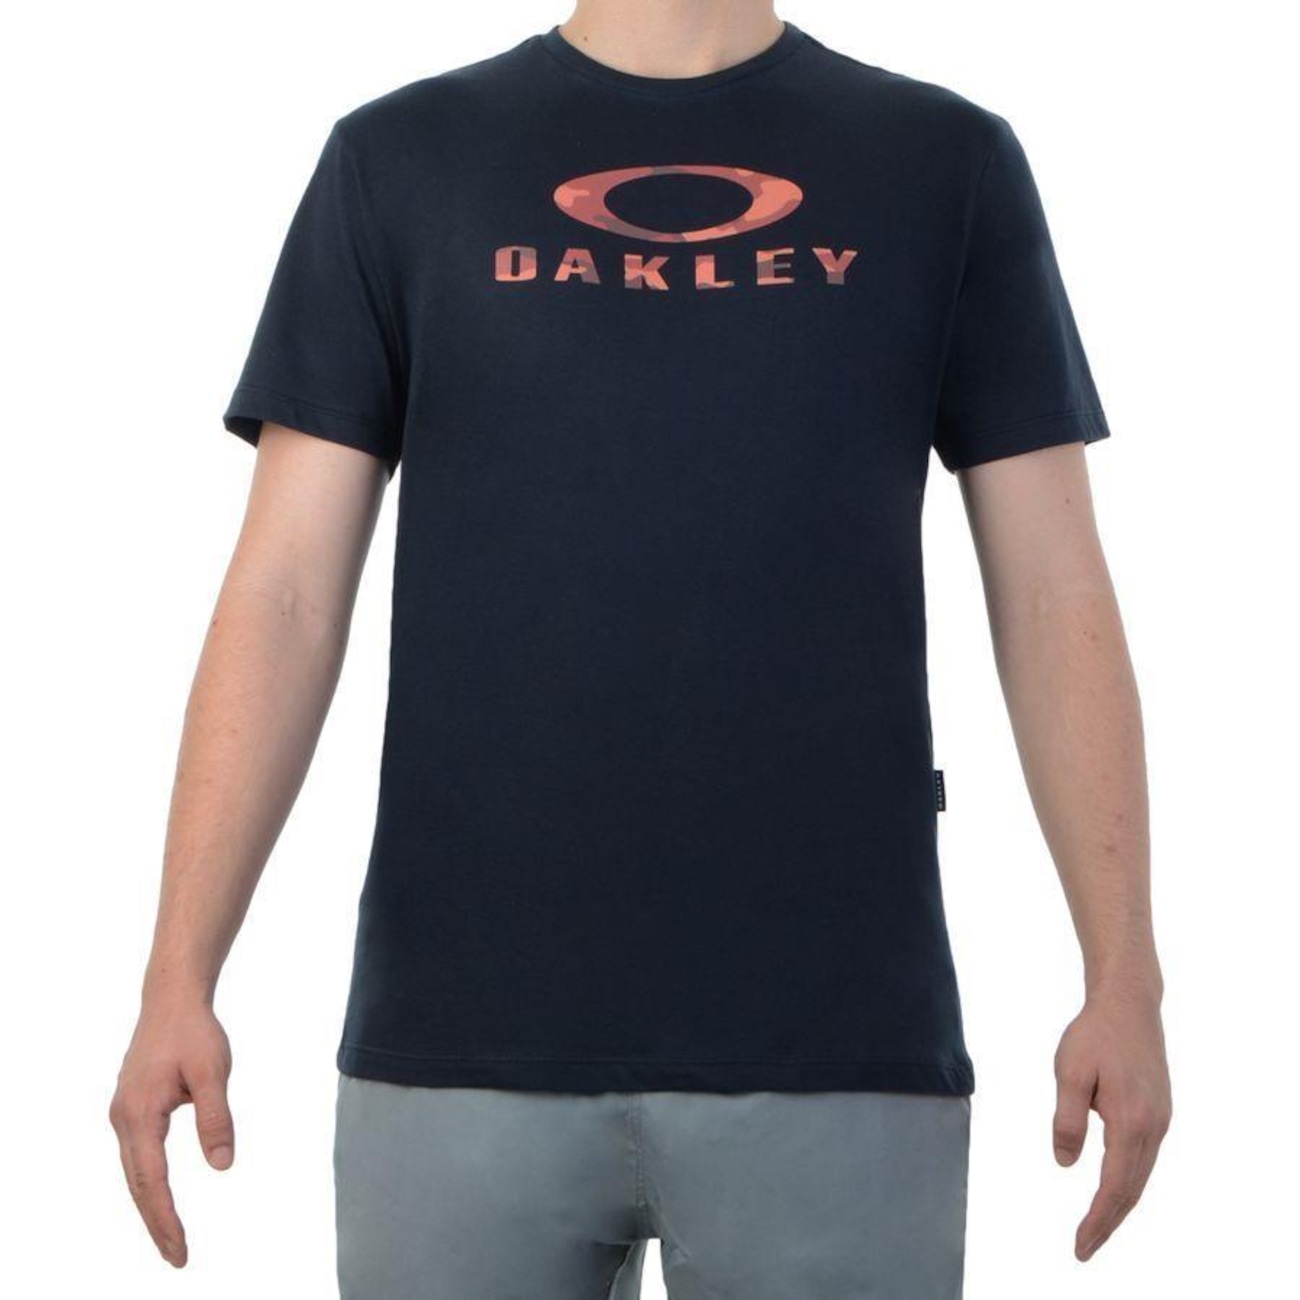 Camiseta Masculina Oakley Arcade Branca - overboard